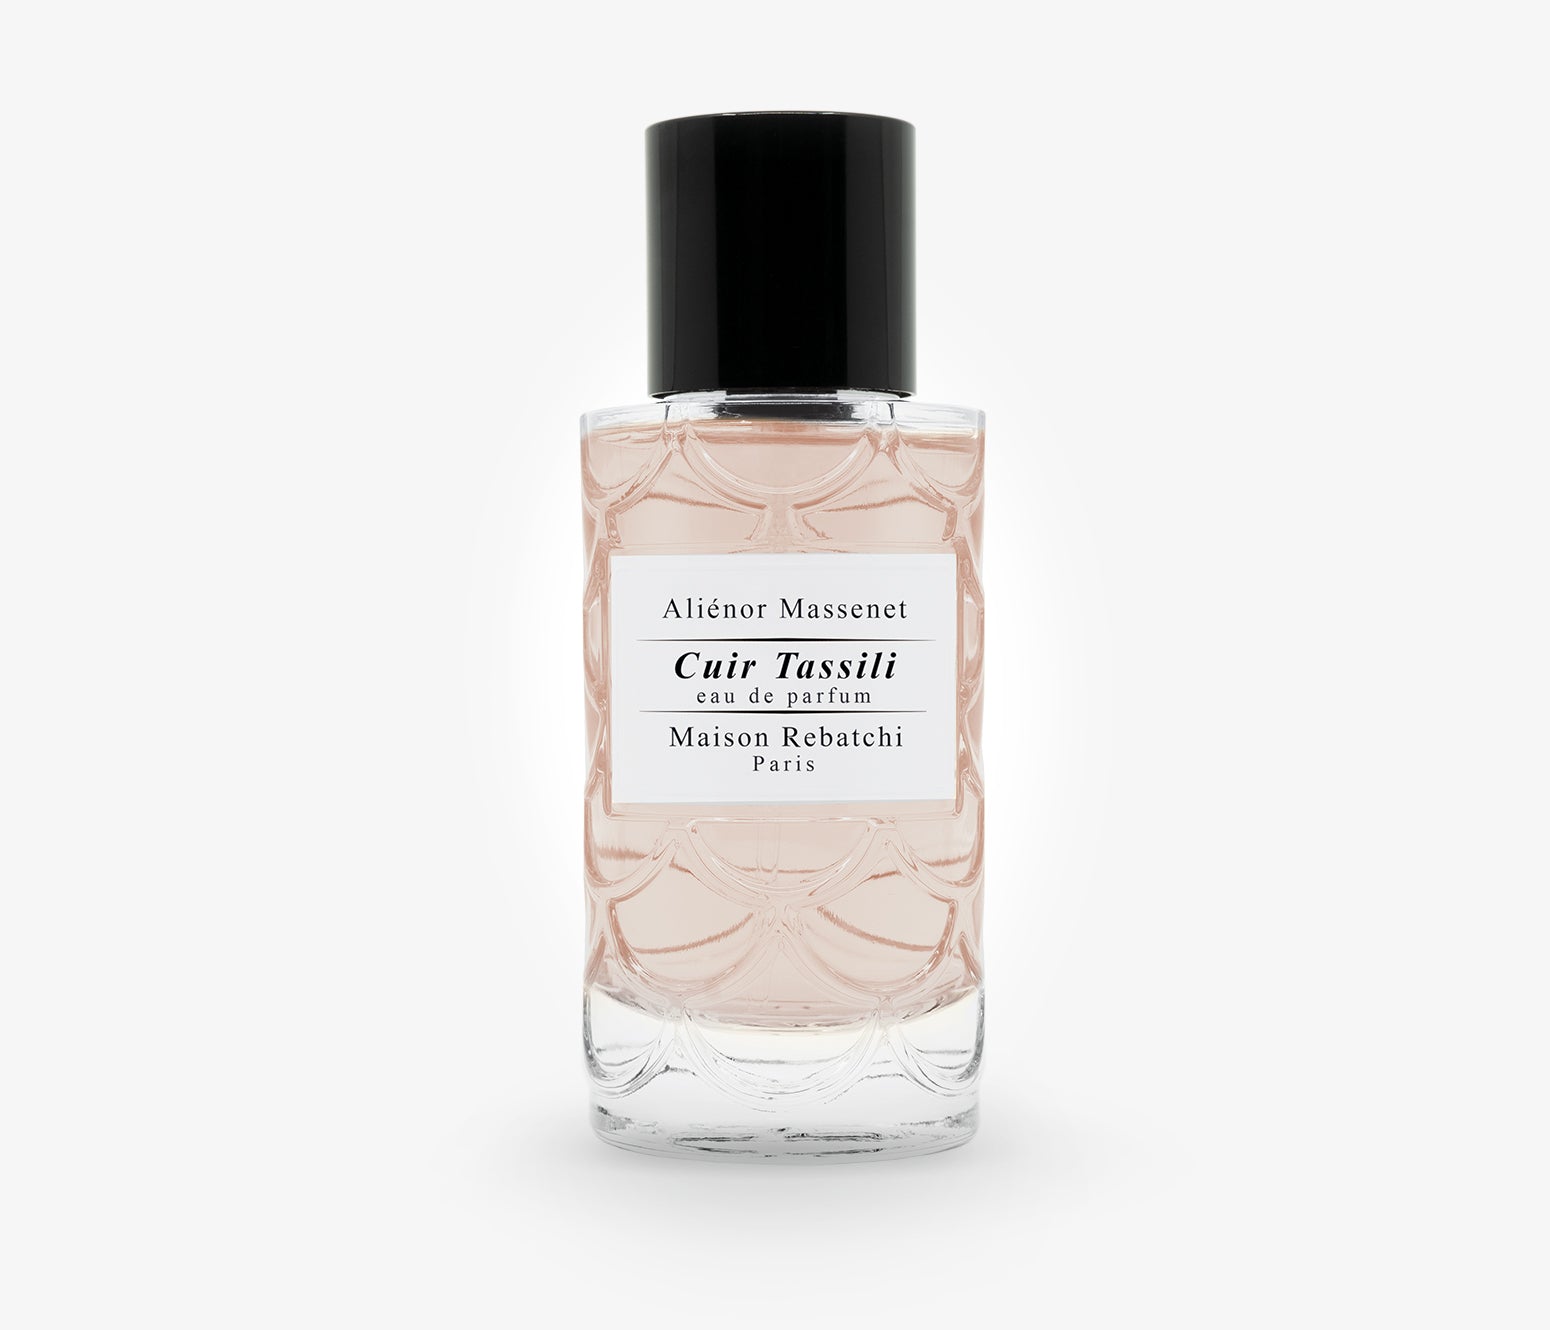 Maison Rebatchi - Cuir Tassili - 50ml - FDA001 - product image - Fragrance - Les Senteurs